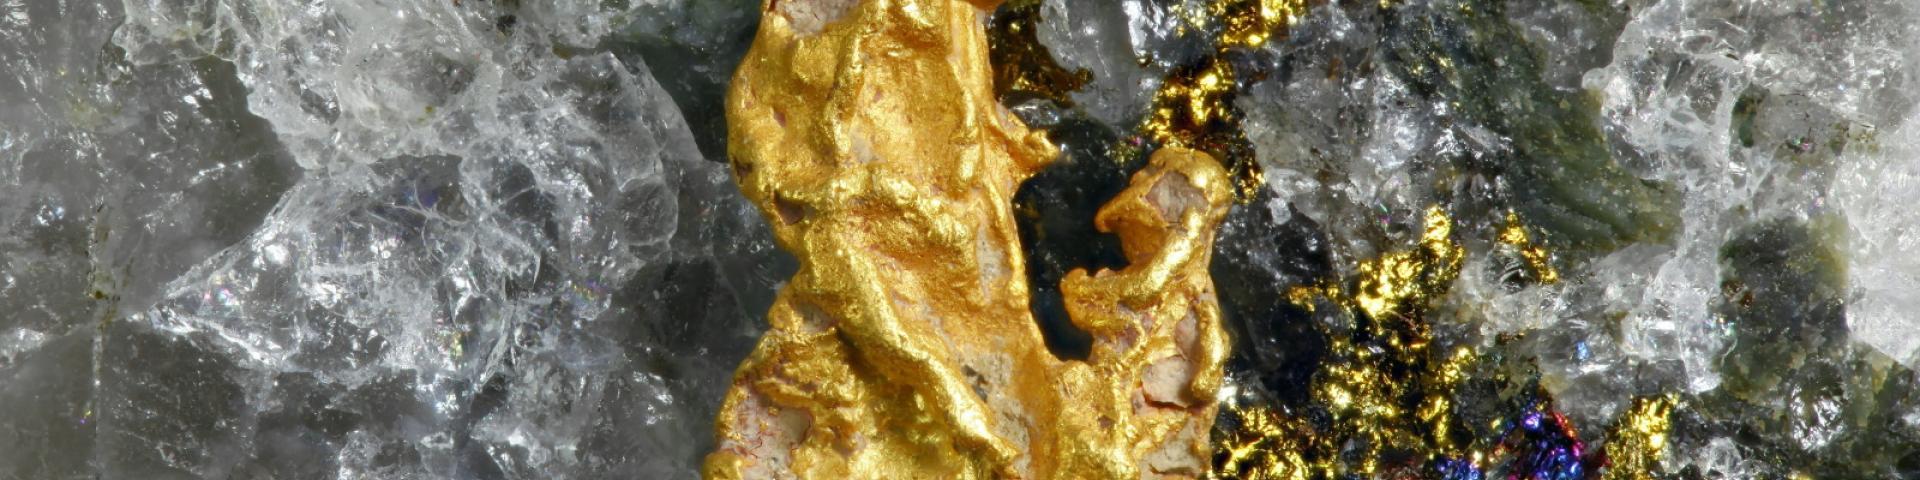 Pépite d'or et quartz (Lapland, Finlande, 2018) © AdobeStock - Henri Koskinen